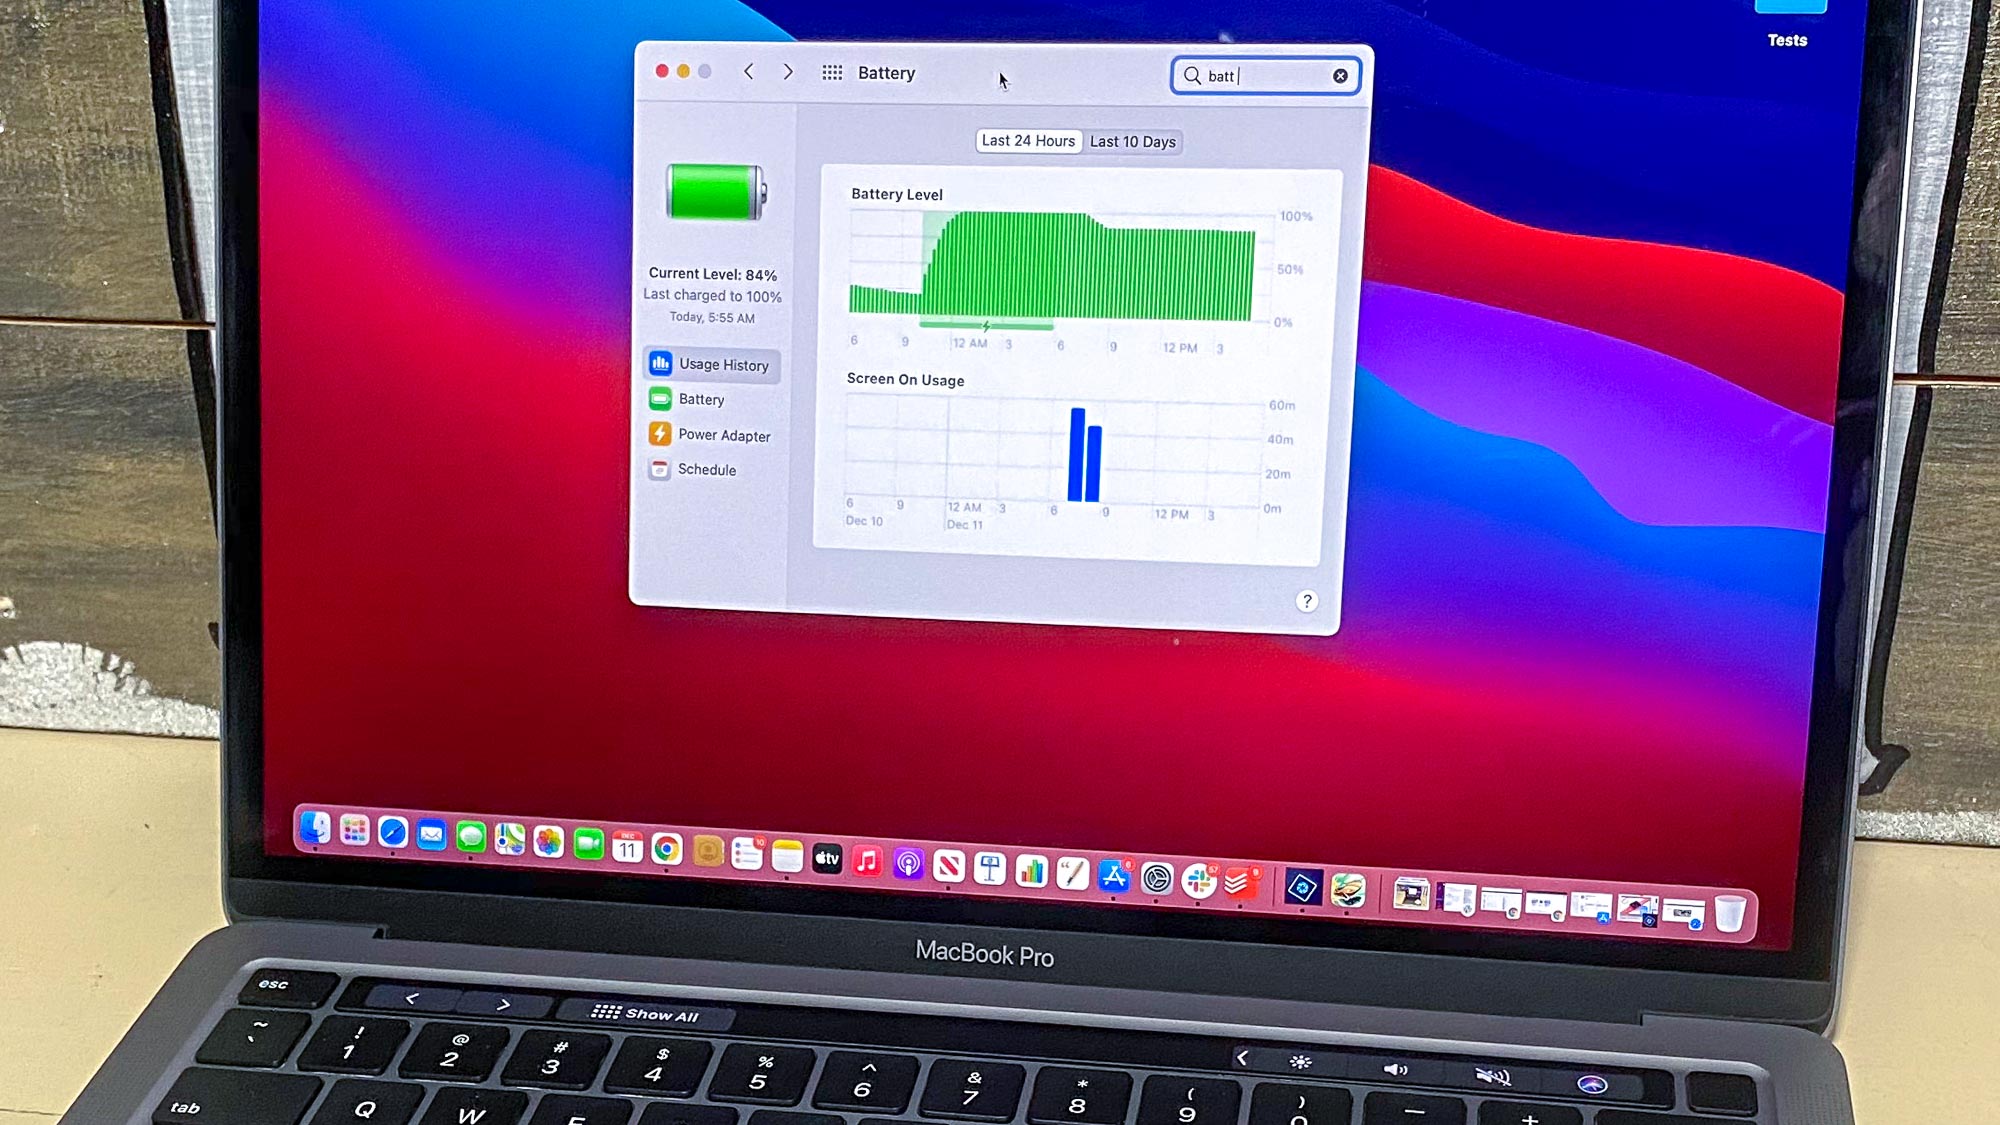 MacBook Pro M1 review